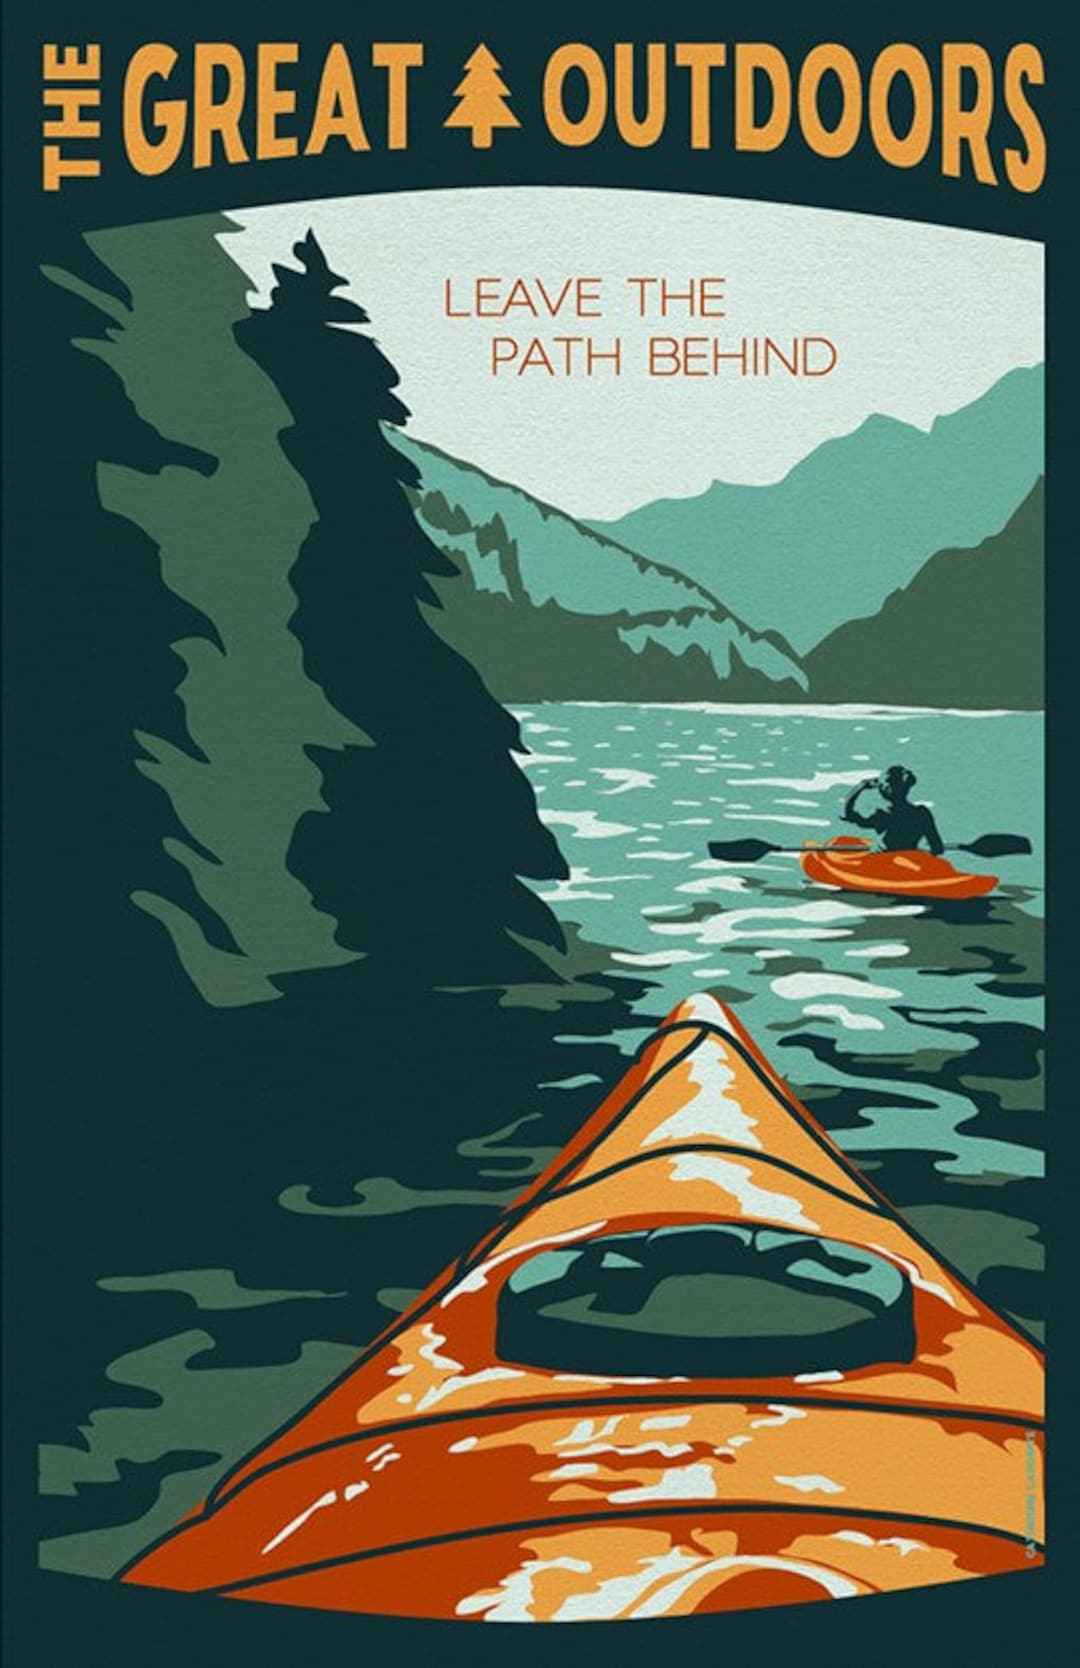 Kayak on Lake or River Vintage Travel Poster Great Outdoors Art